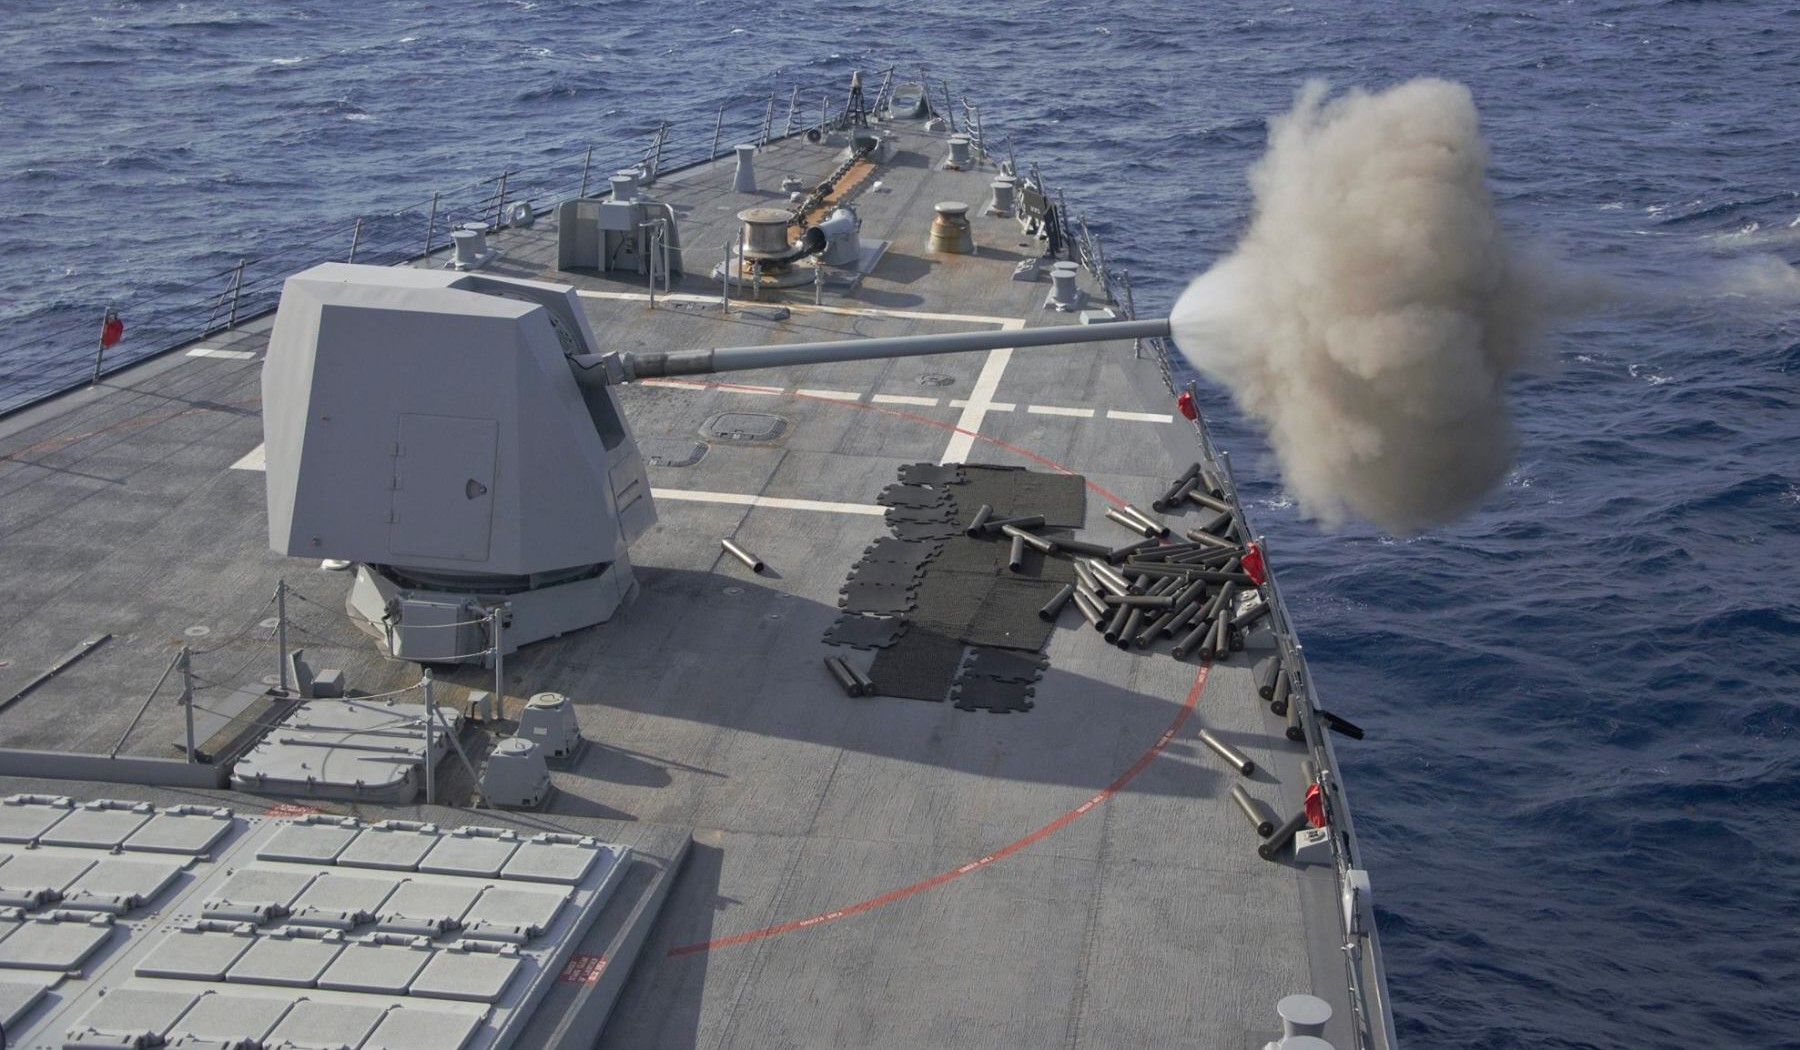 ddg-116 uss thomas hudner arleigh burke class guided missile destroyer us navy aegis 28